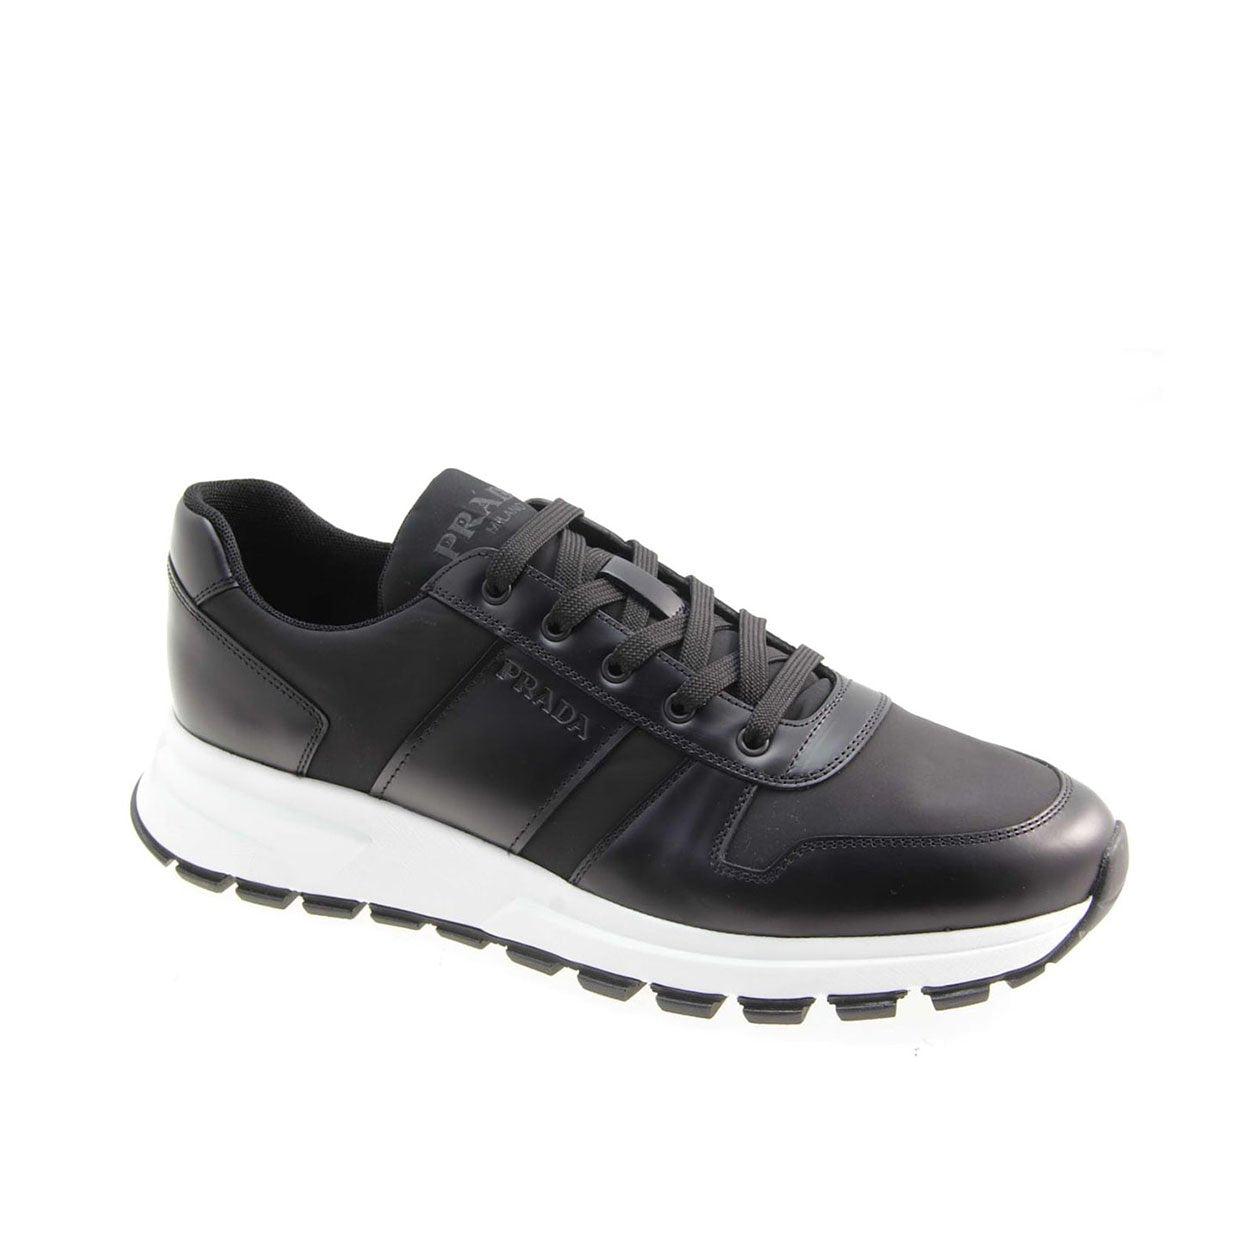 Prada 4e3463-3kyu Shoes Fabric / Calf-skin Leather Casual Sneakers ...